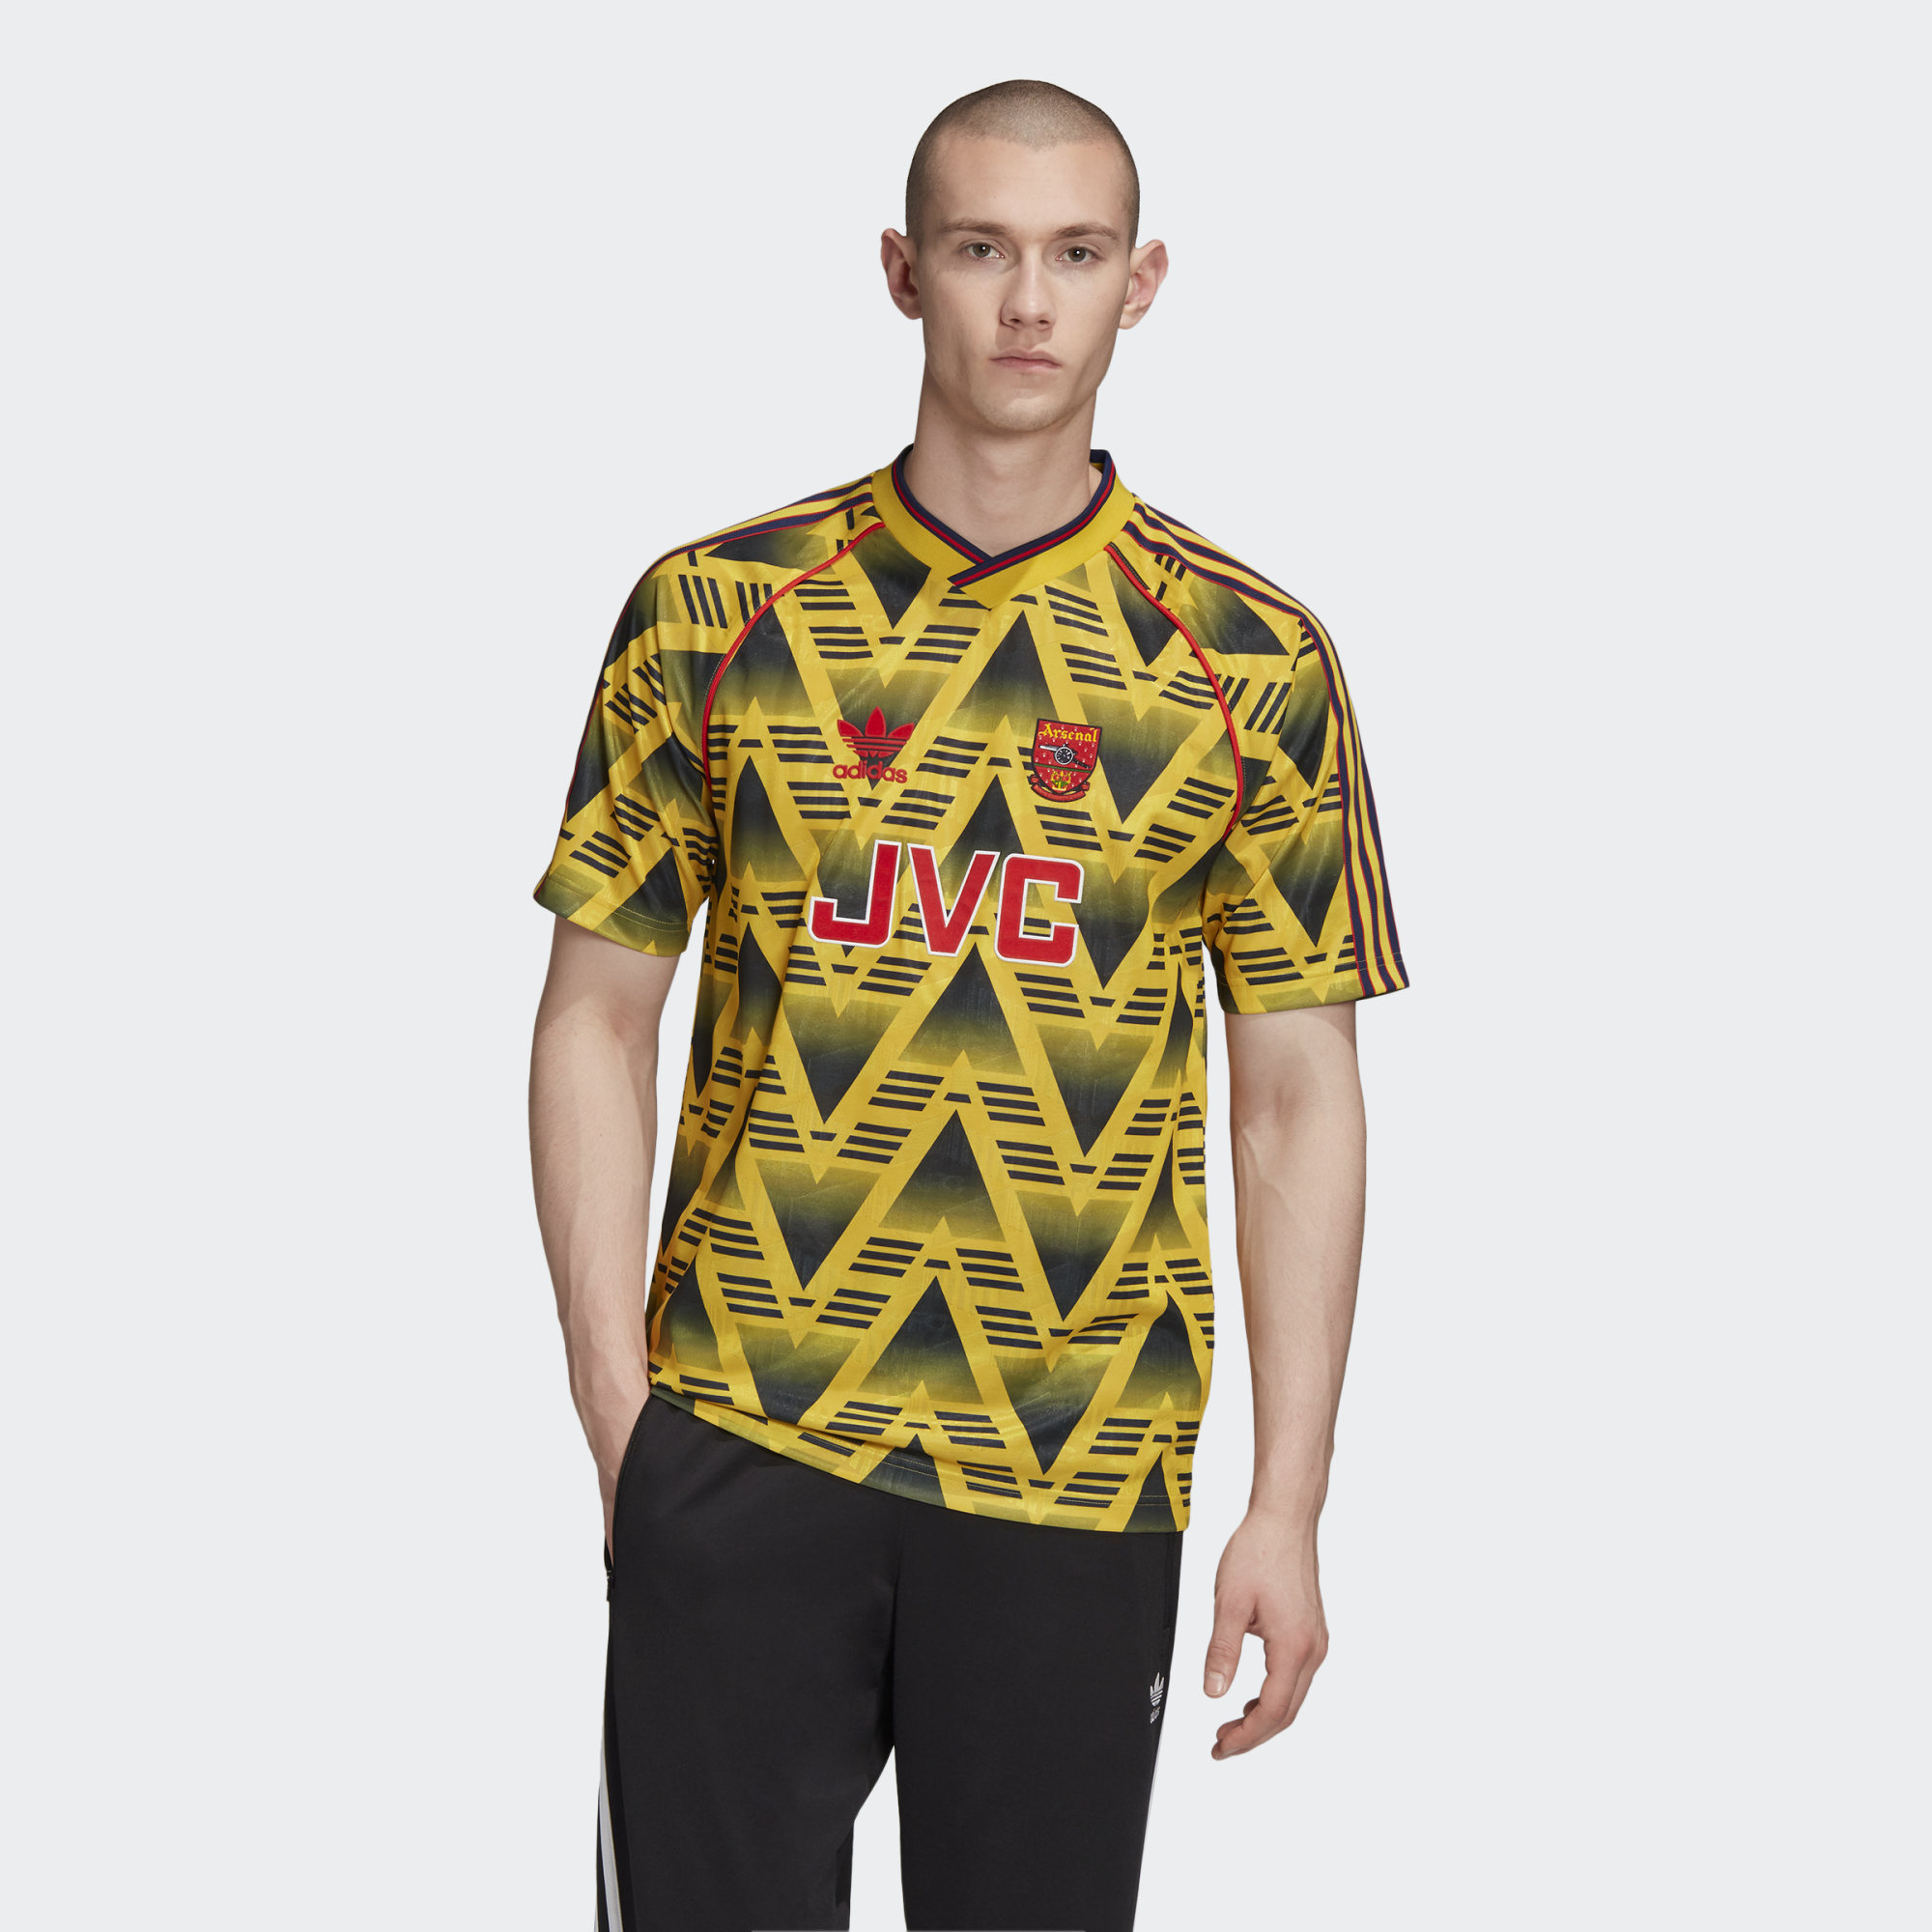 Unboxing Matchworn Original Arsenal Bruised Banana Long Sleeve - Worst  Classic Football Shirt Ever? 